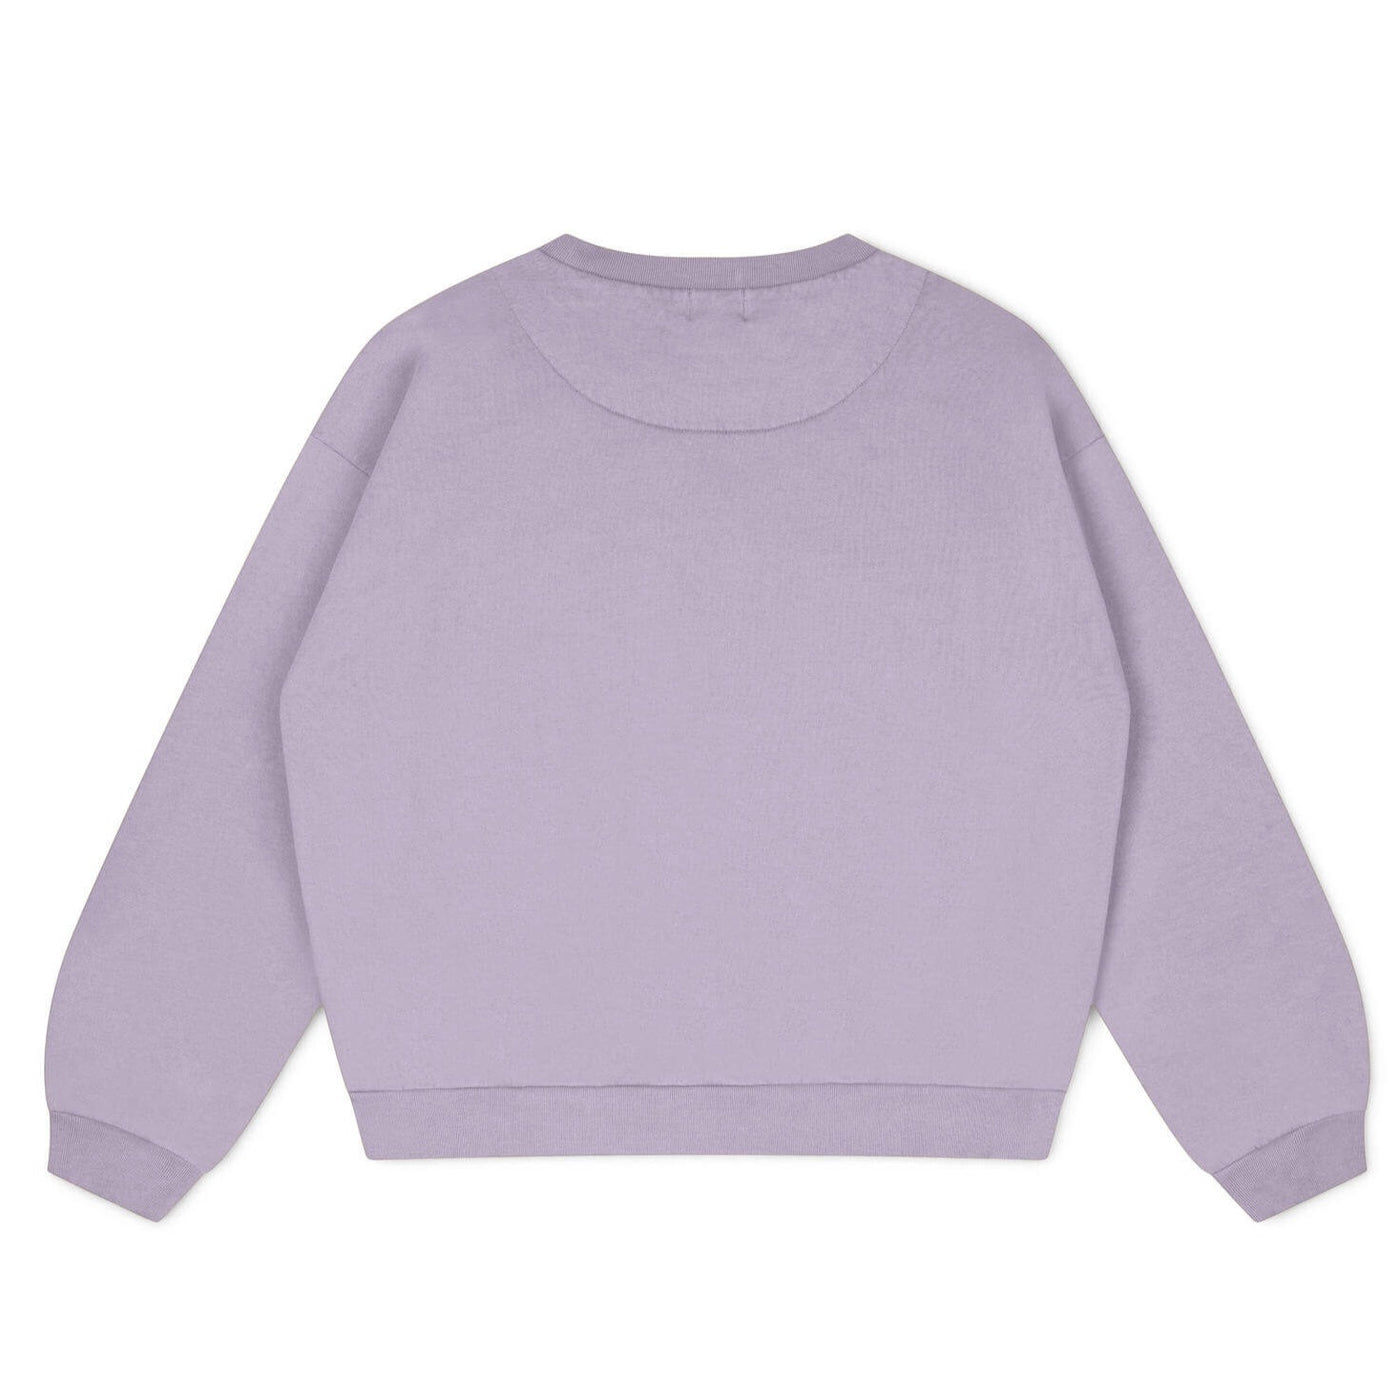 Light Sweatshirt Lilac